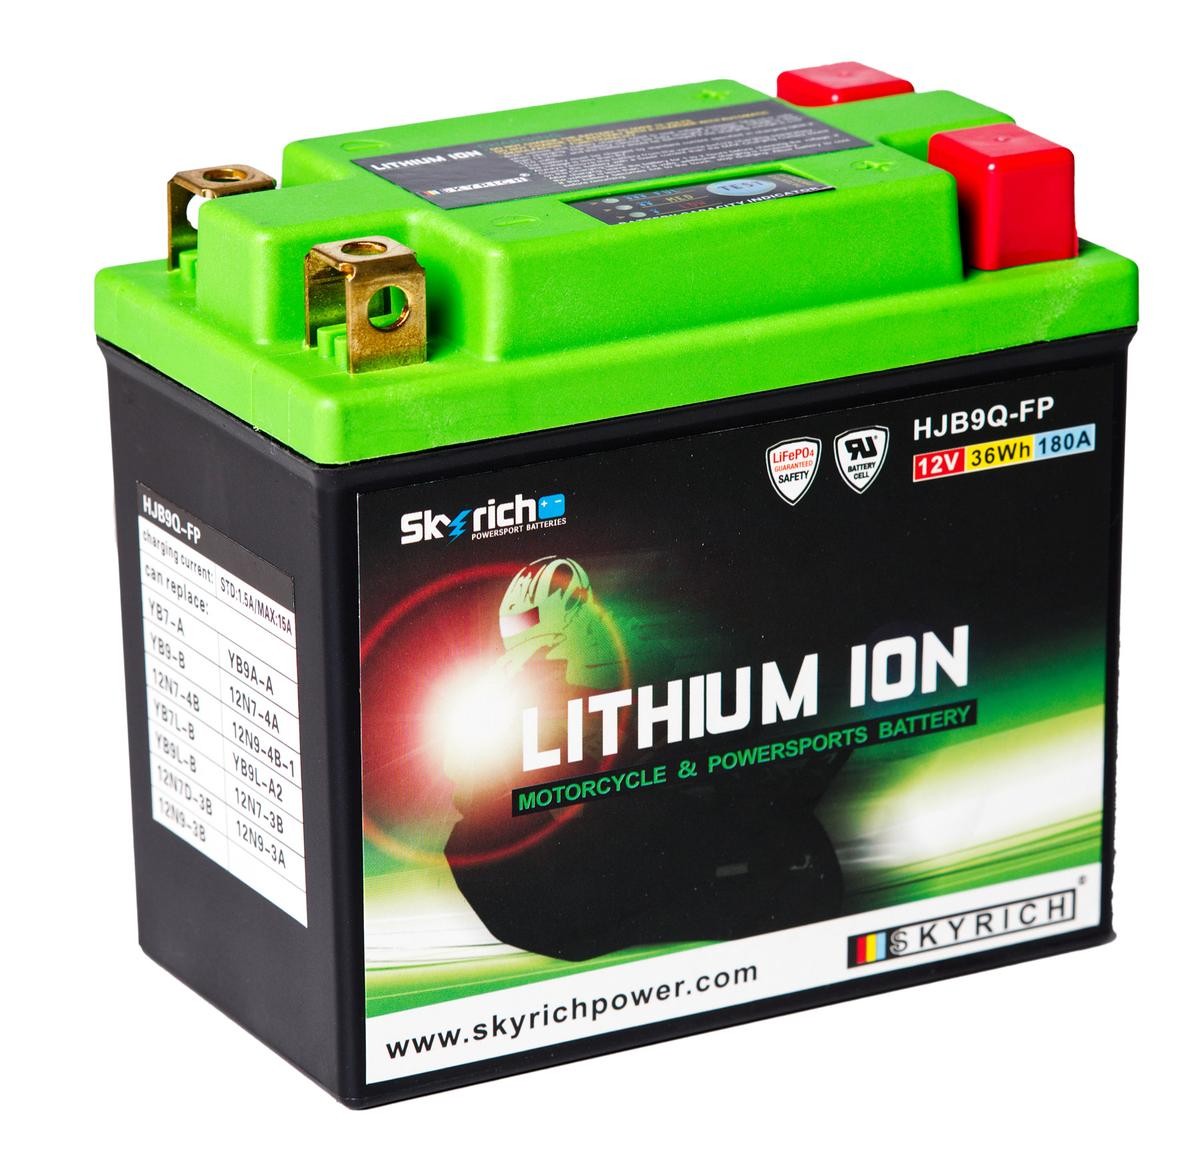 MALAGUTI MADISON Batterie 12V 3Ah 180A N Li-Ionen-Batterie SKYRICH LITHIUM ION HJB9Q-FP